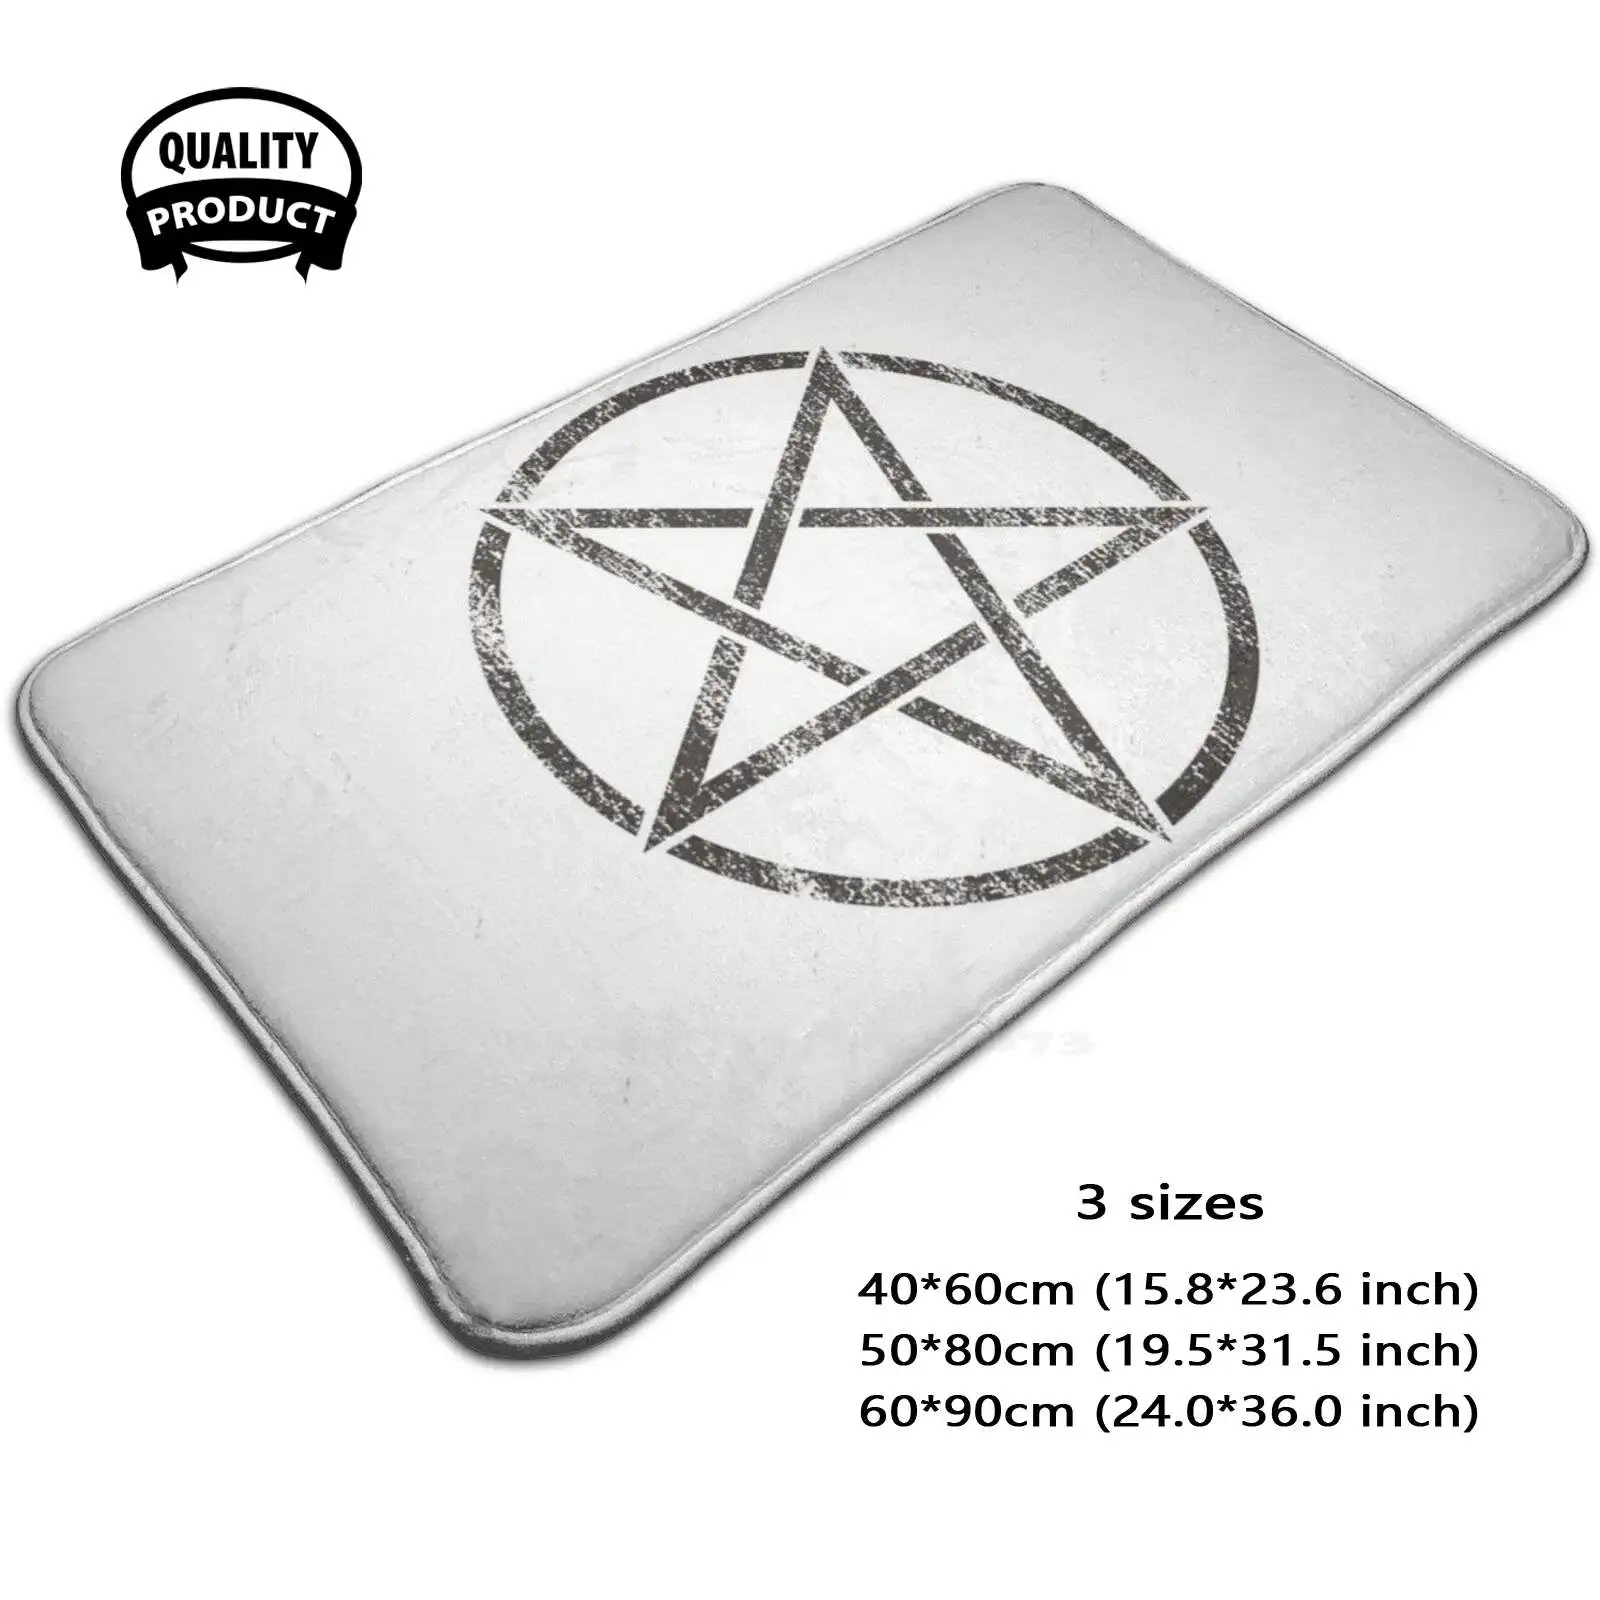 Worn Pentagram 3 Sizes Home Rug Room Carpet Pentagram Occult Satan Witch Devil Gothic Pagan Satanic 666 Magic Wicca Dark Funny